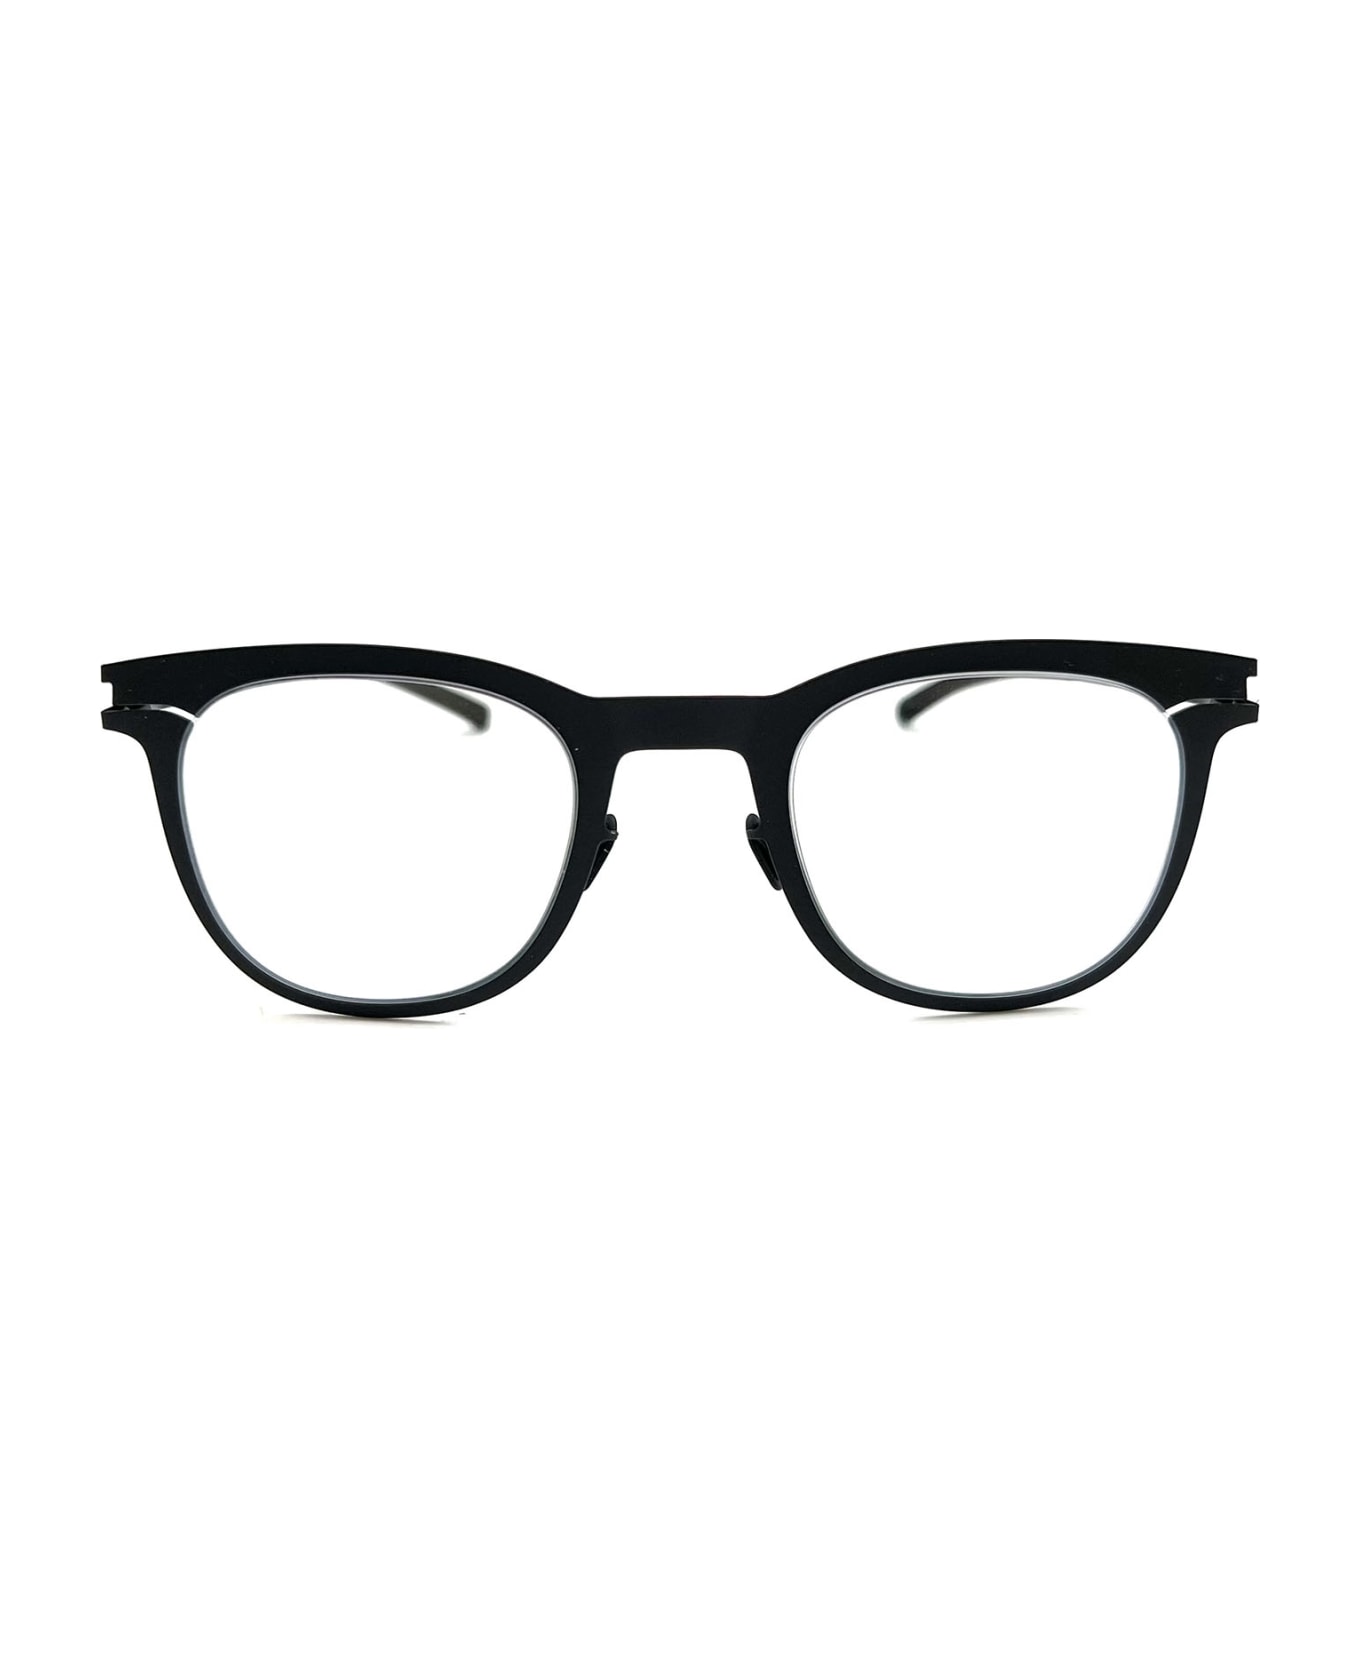 Mykita DELANO Eyewear - Black Clear